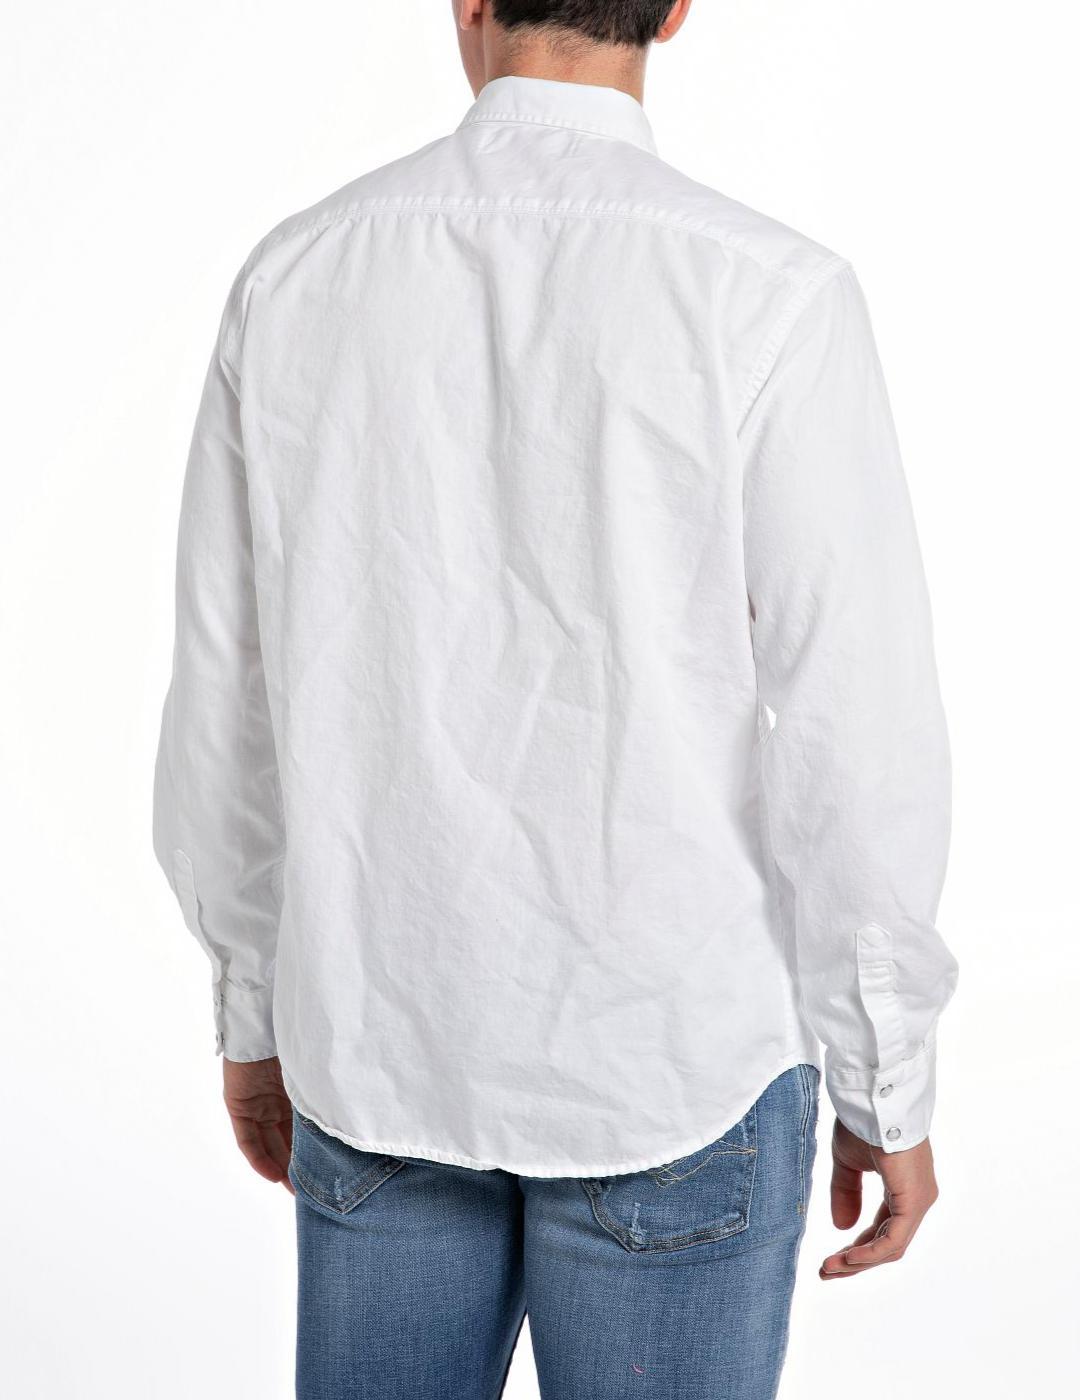 Camisa Replay blanca vaquera y bolsillos manga larga hombre